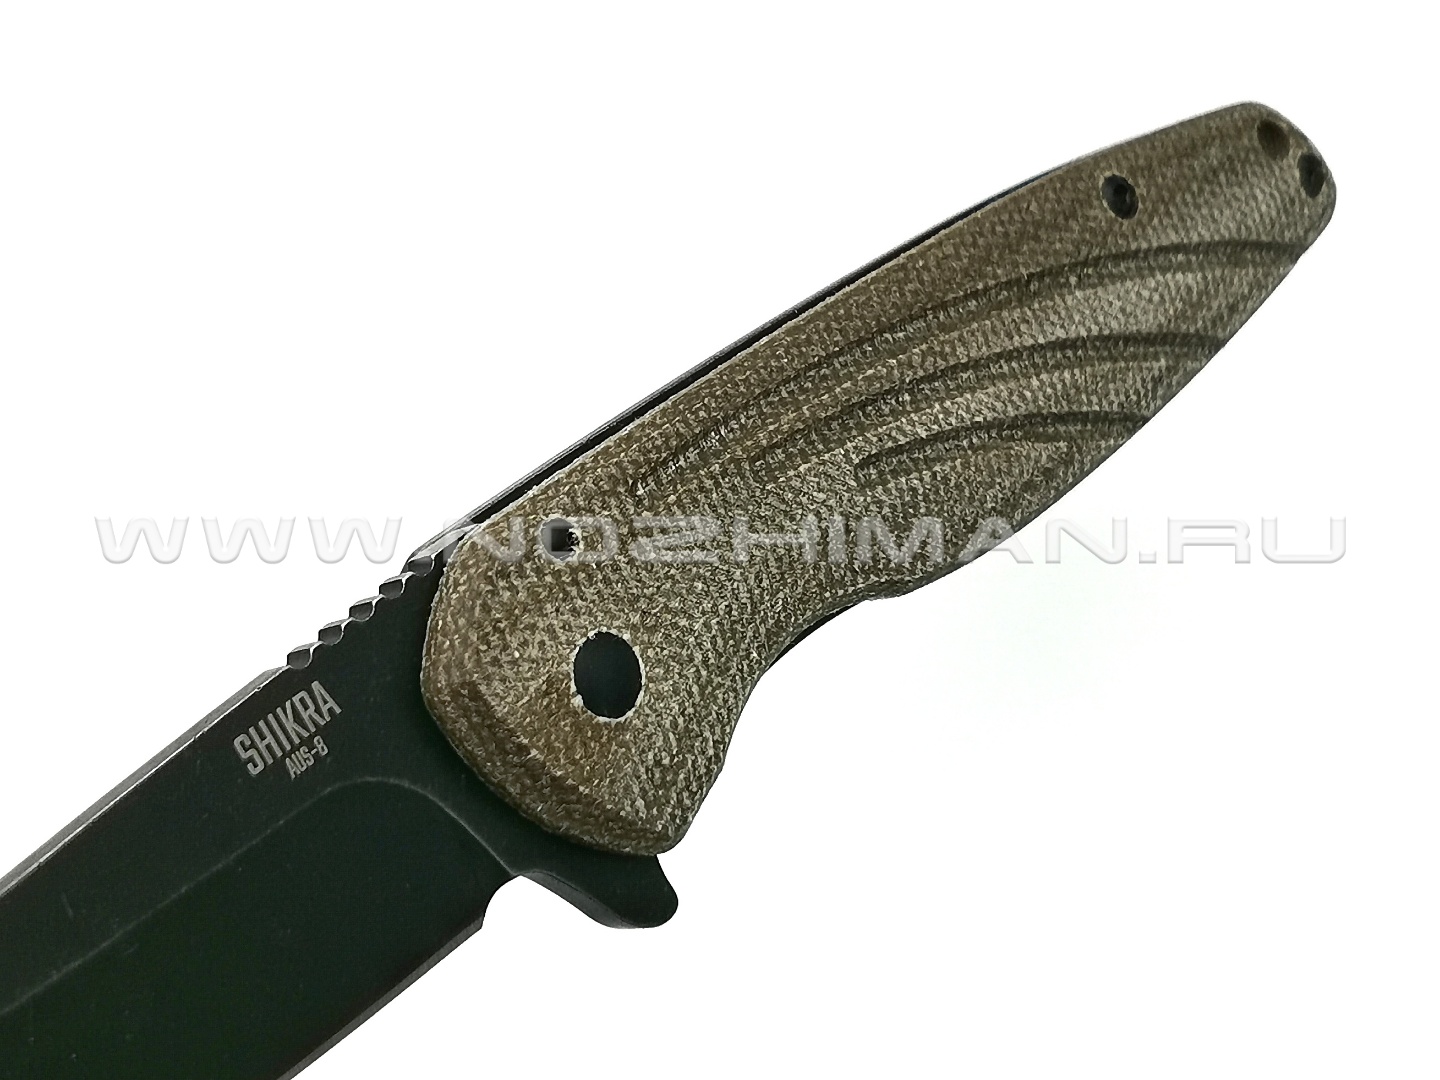 Ontario нож Shikra 8599 сталь Aus-8, рукоять микарта, титан